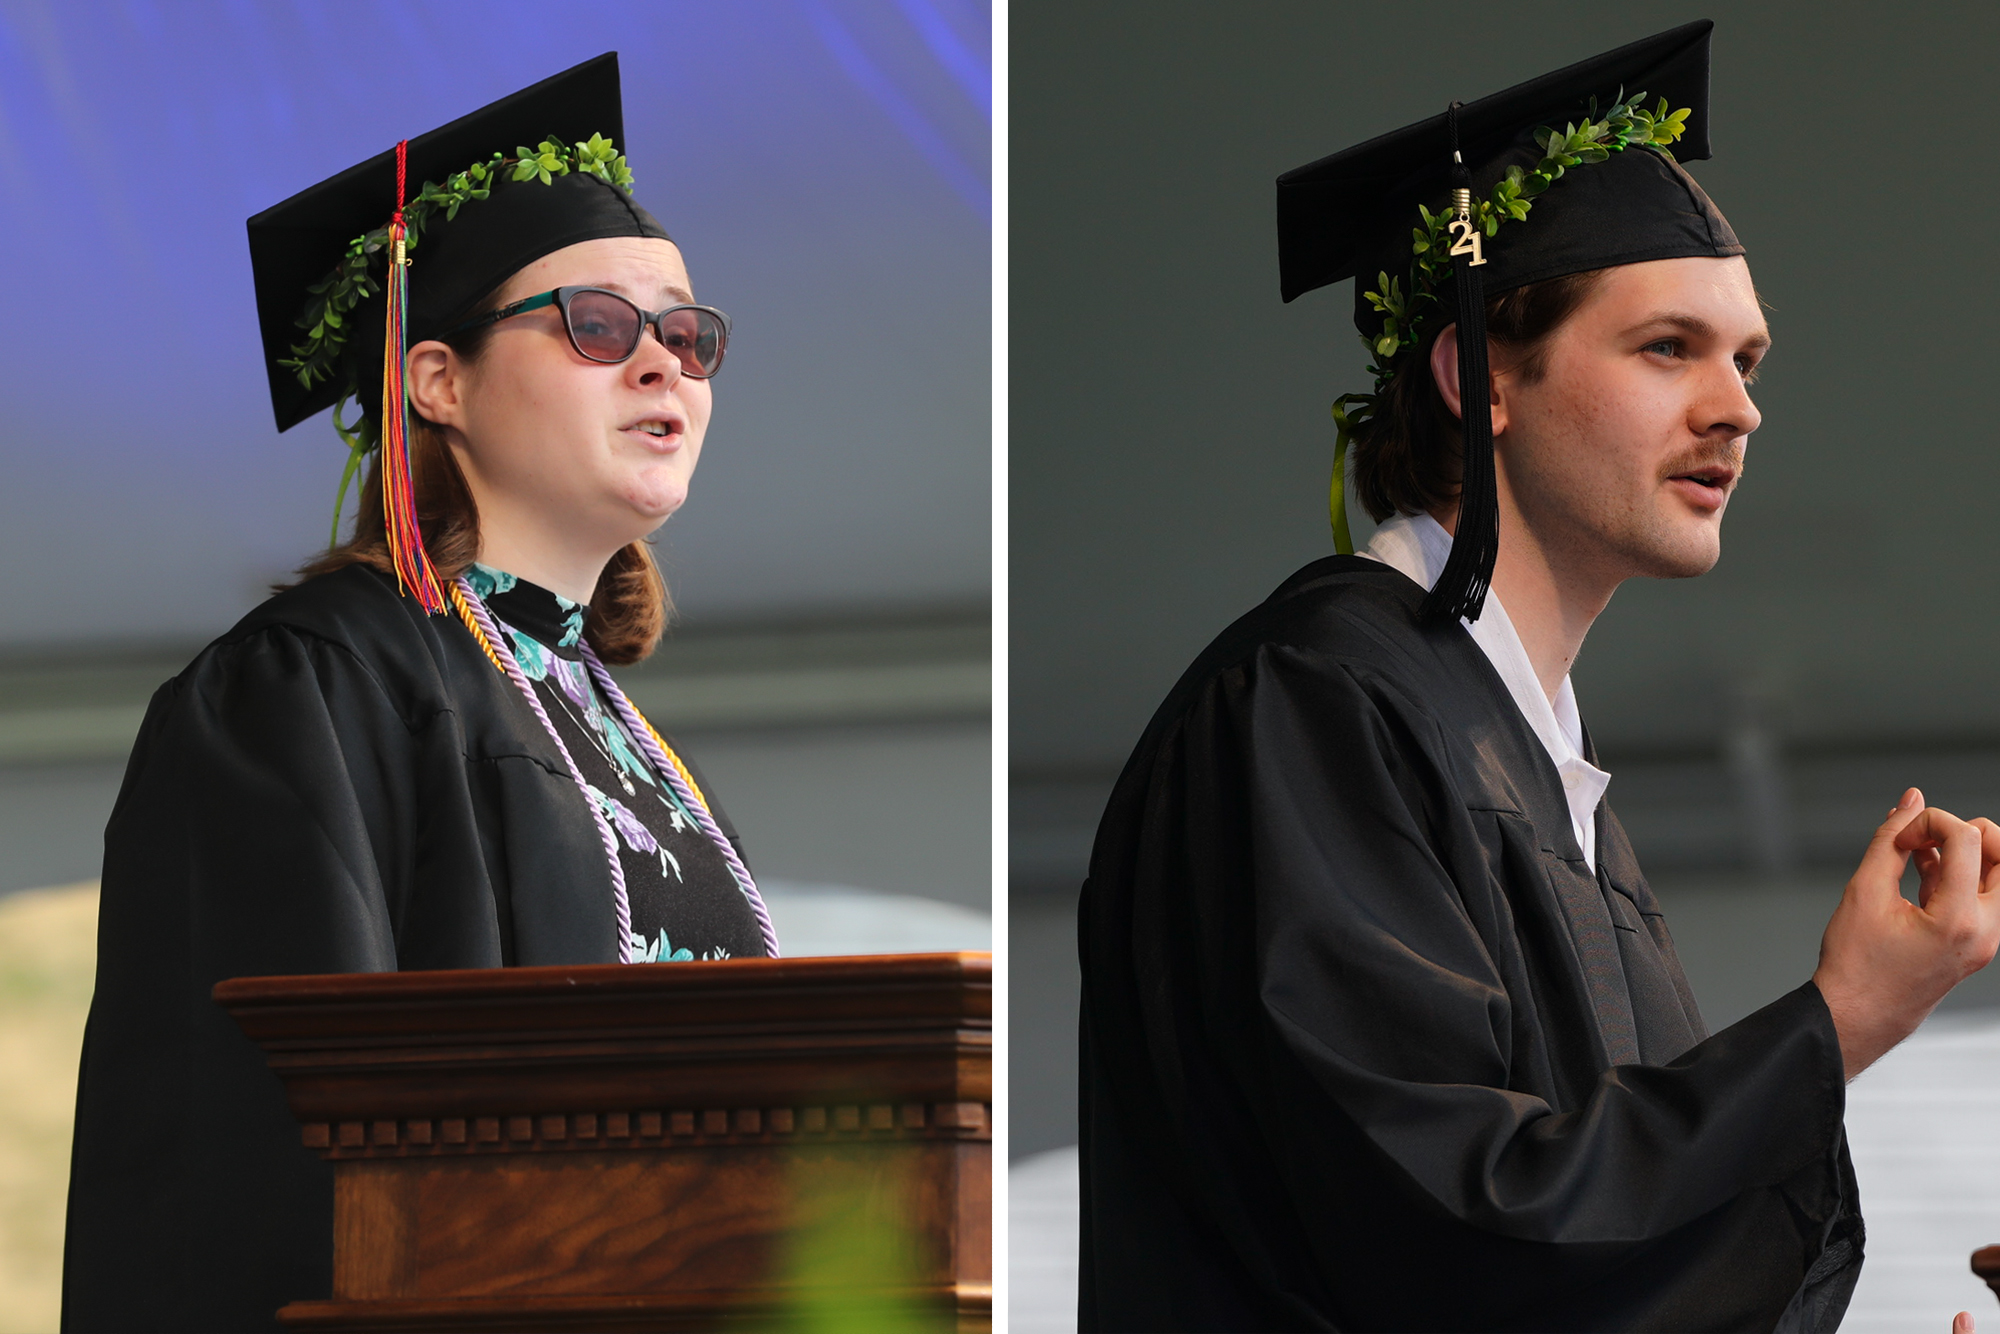 Graduates speaking at the podium during graduation: Kasey M. Roper, left, Elliott Carter, right